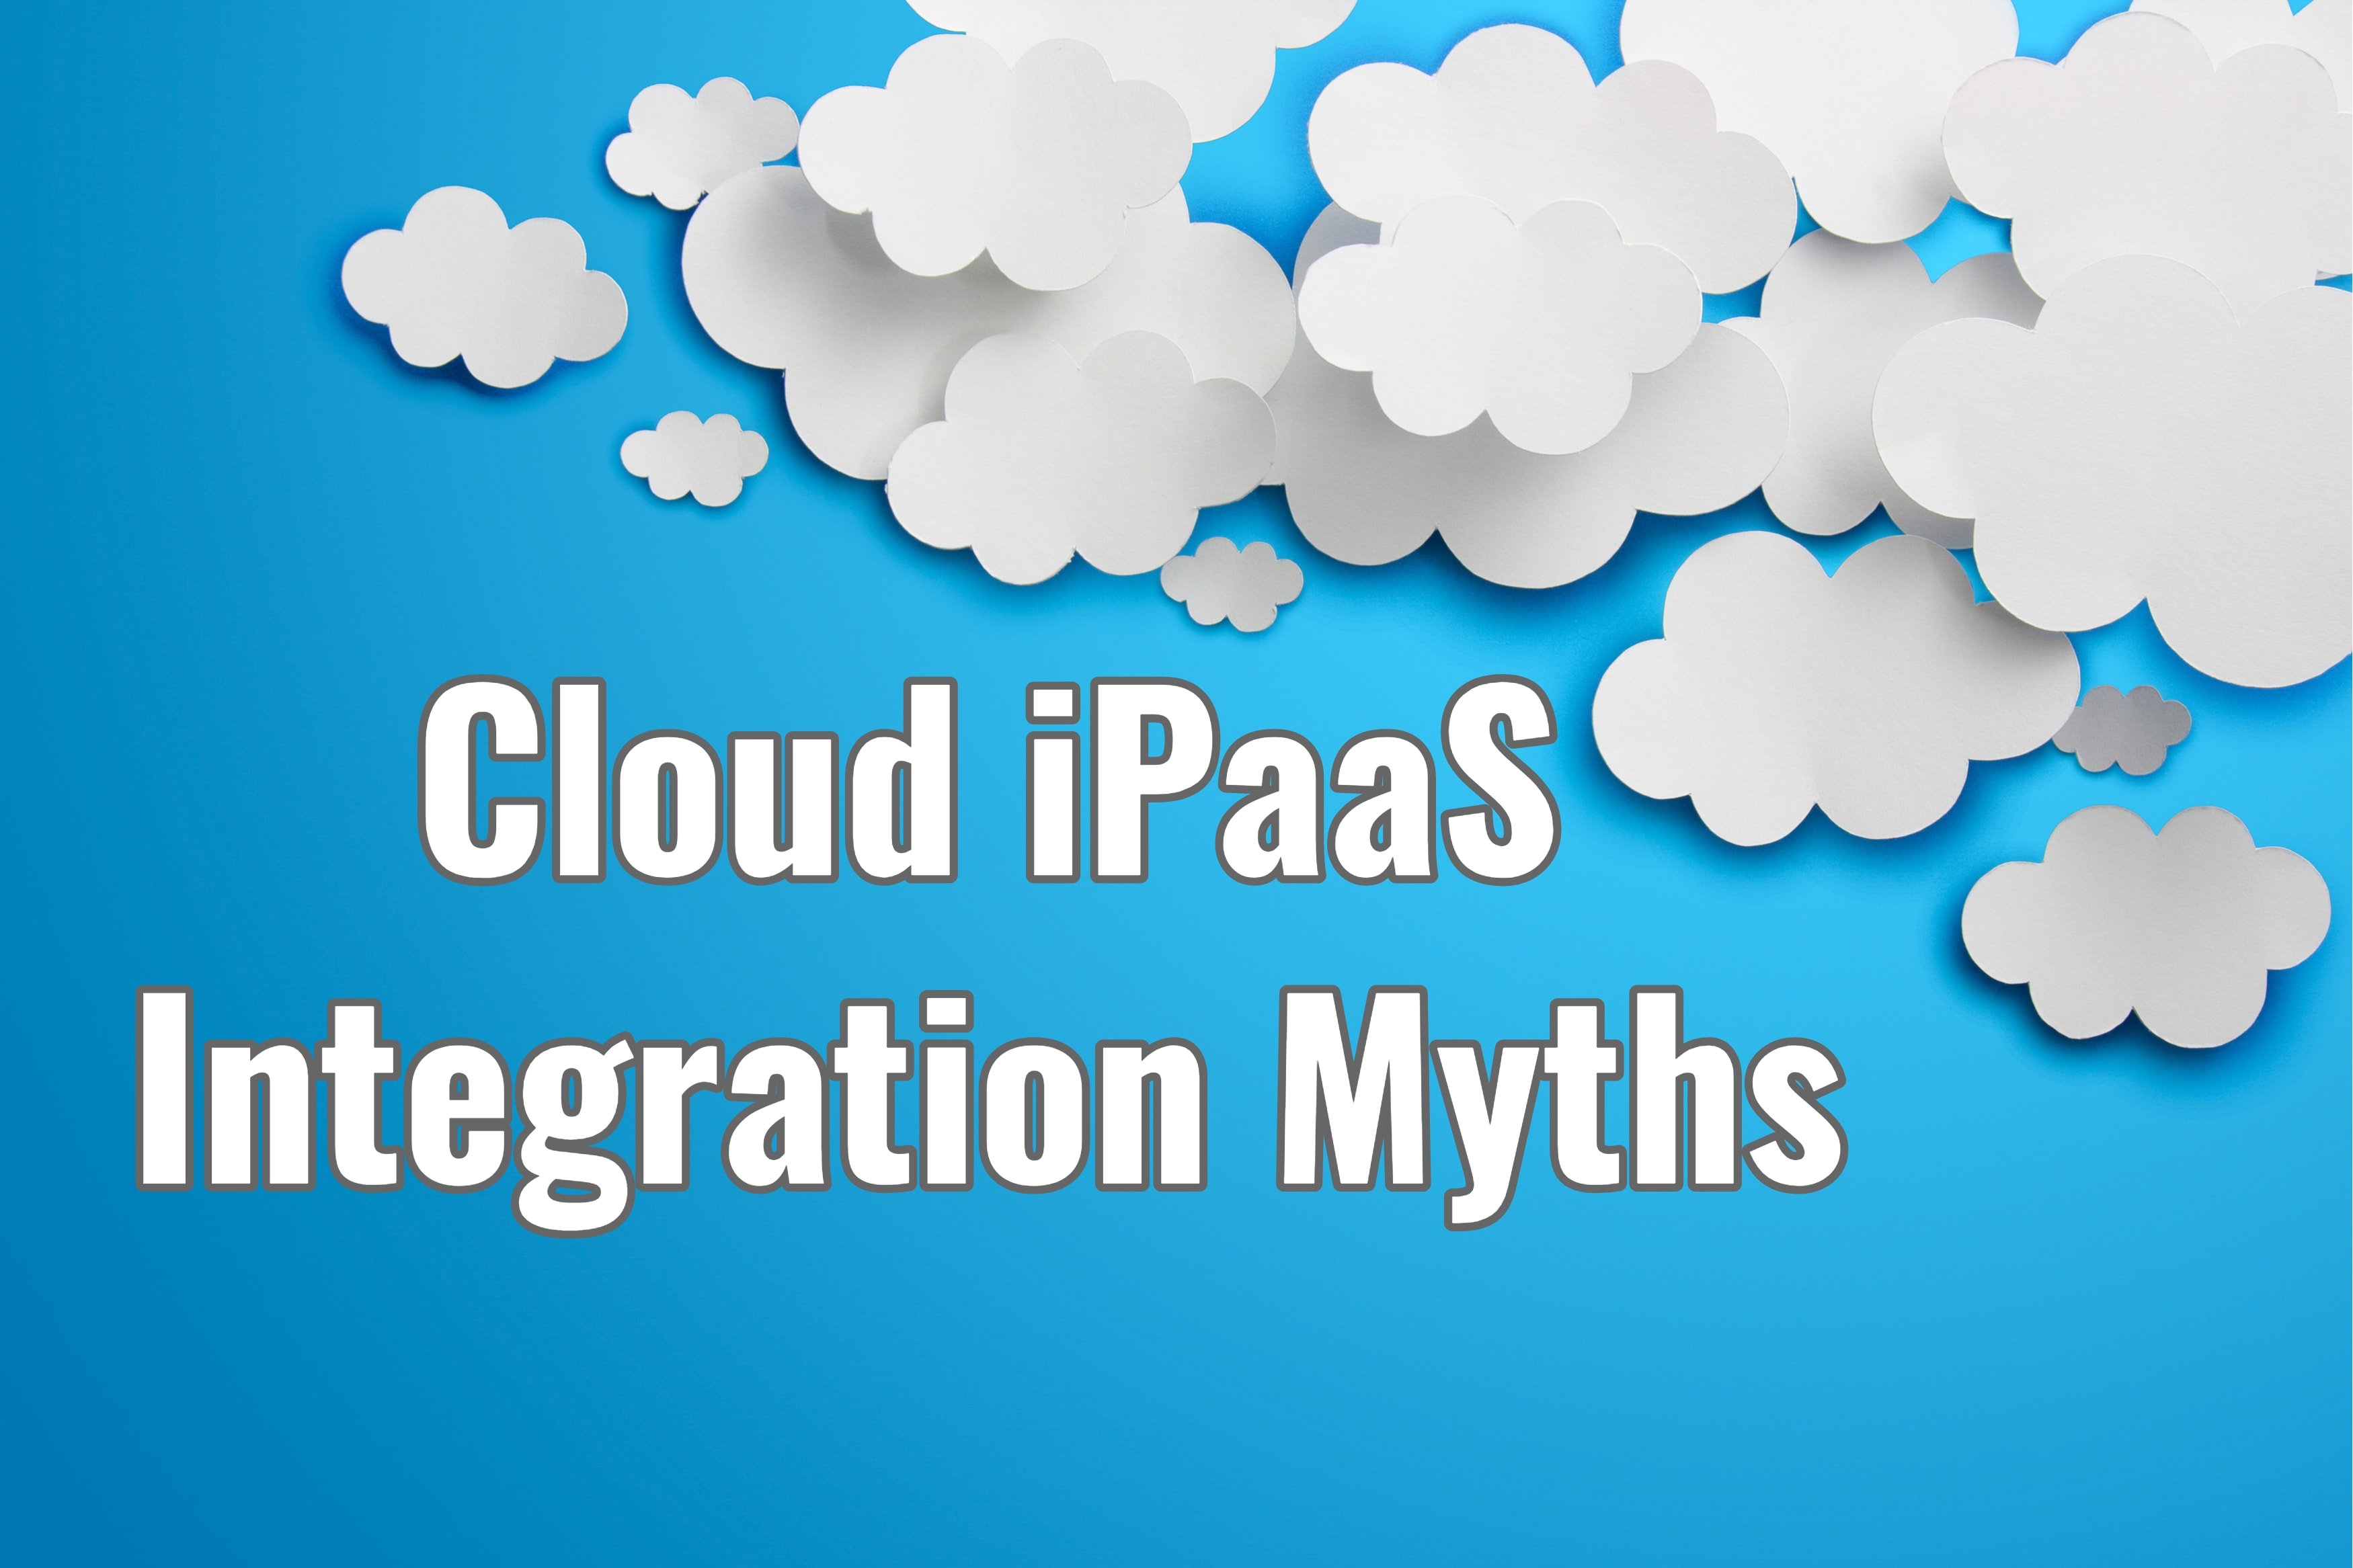 Cloud iPaaS Integration Myths